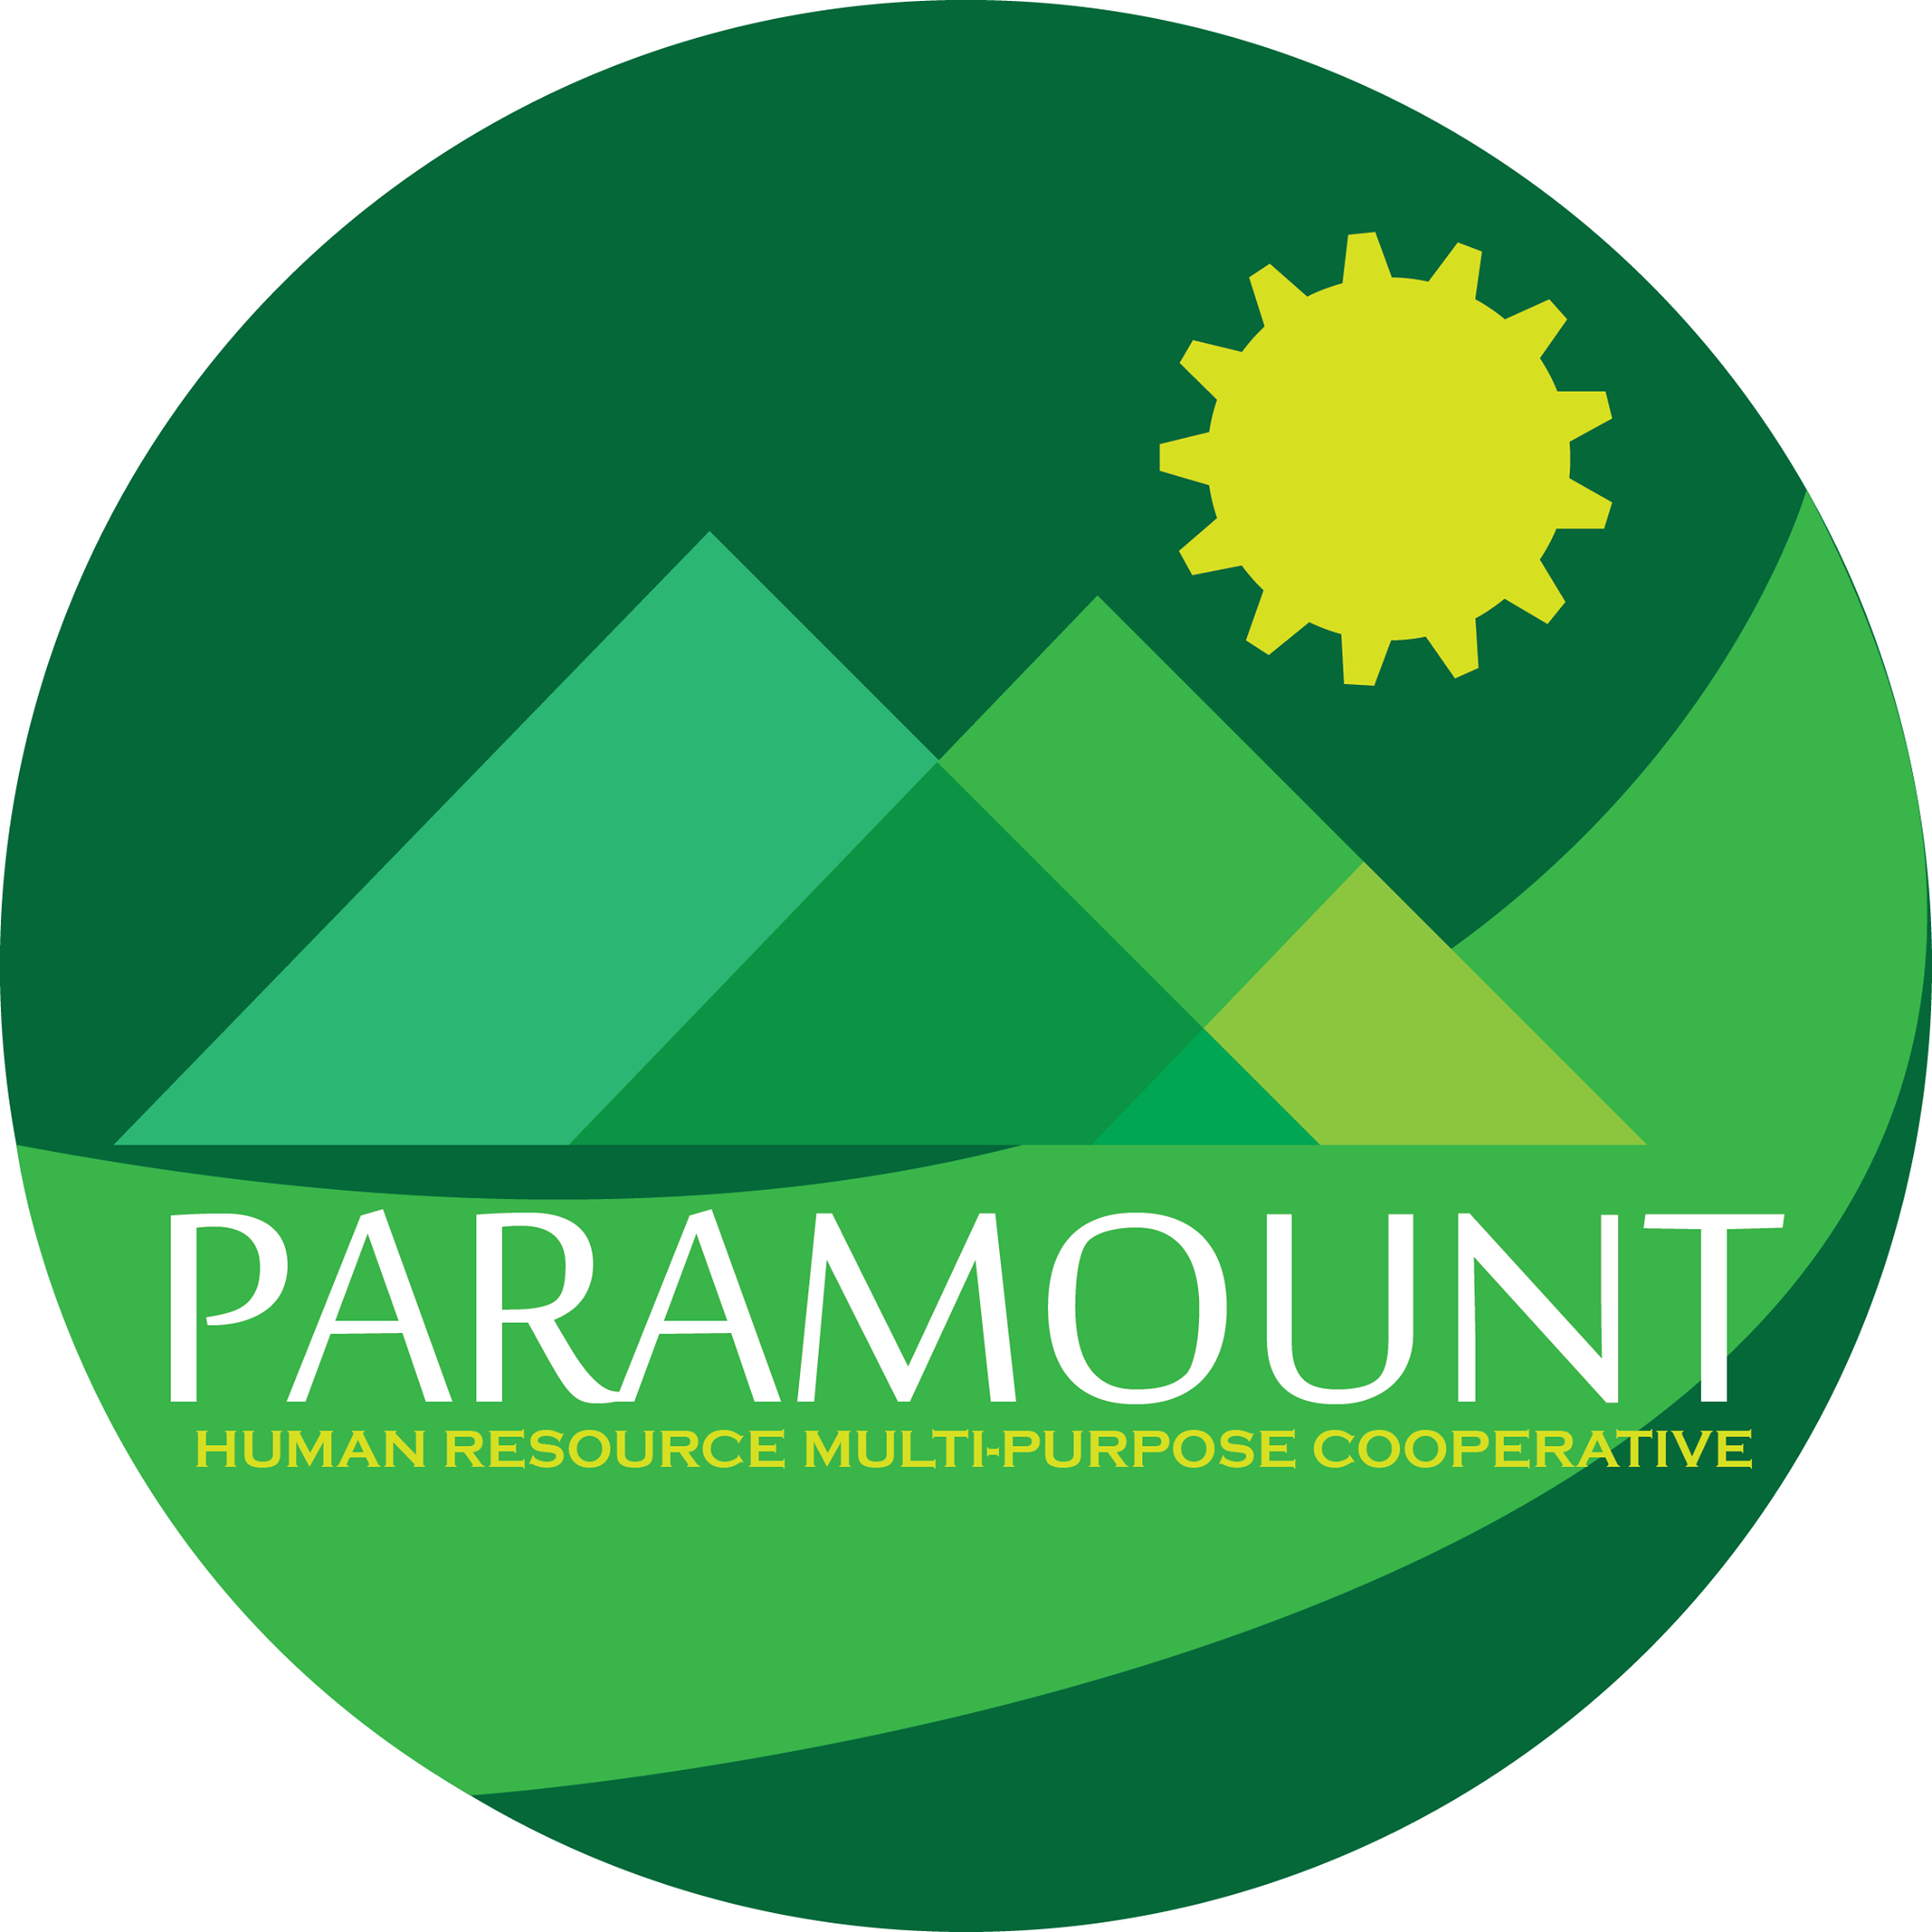 Paramount Human Resource Multi-Purpose Cooperative